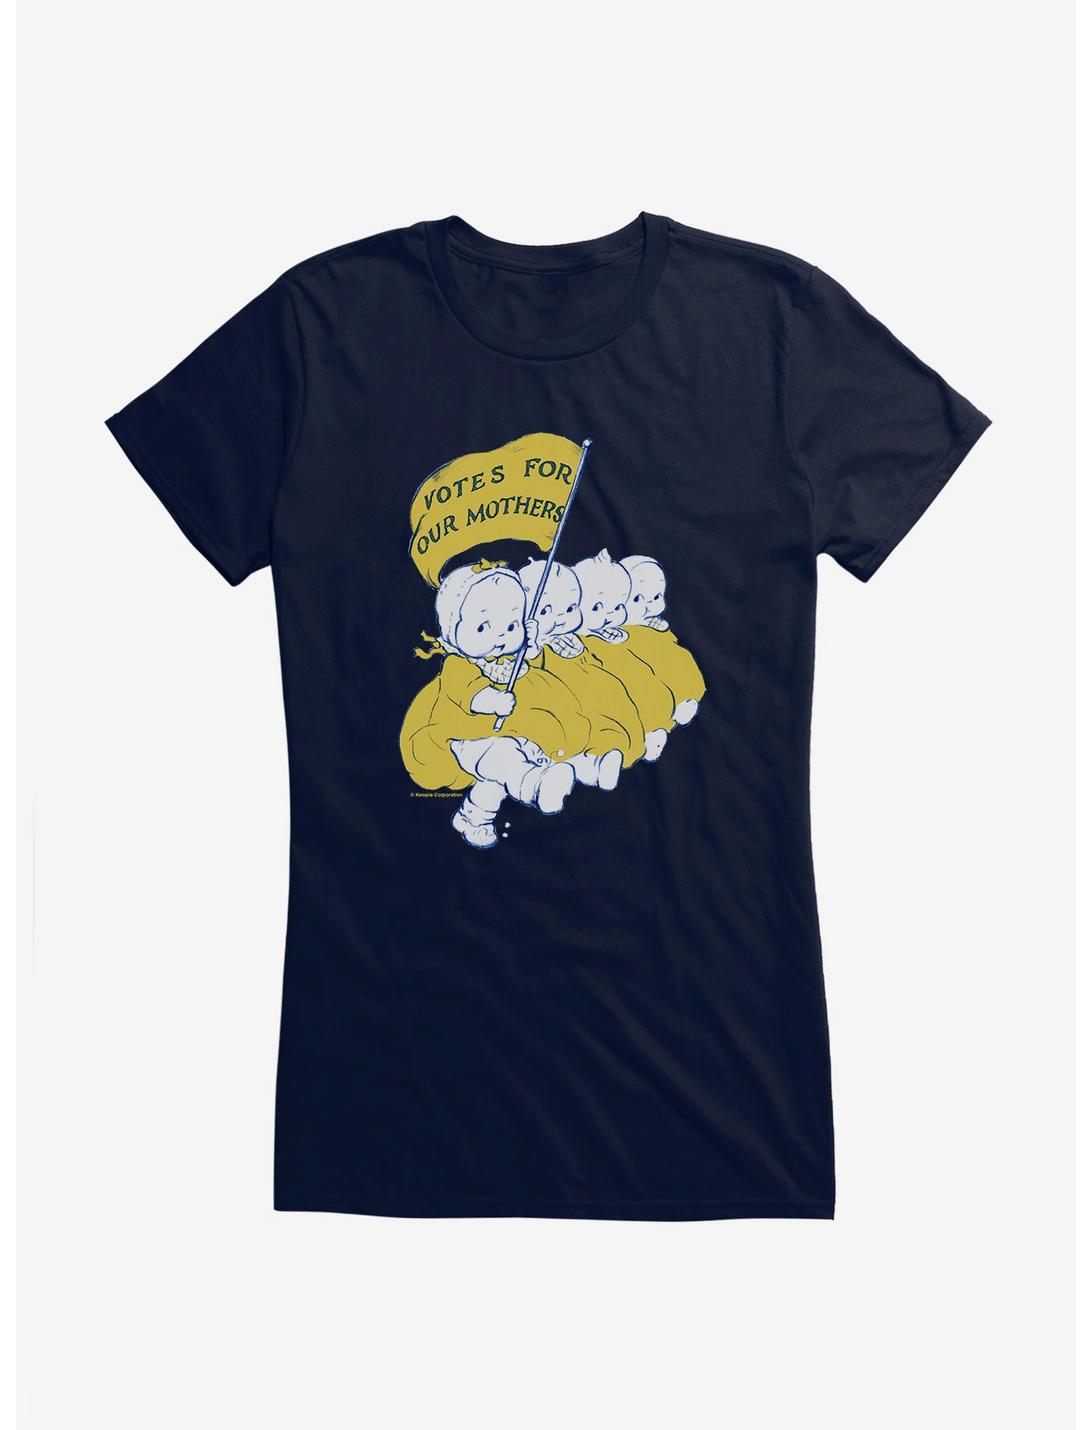 Kewpie Votes For Our Mother Banner Girls T-Shirt, , hi-res